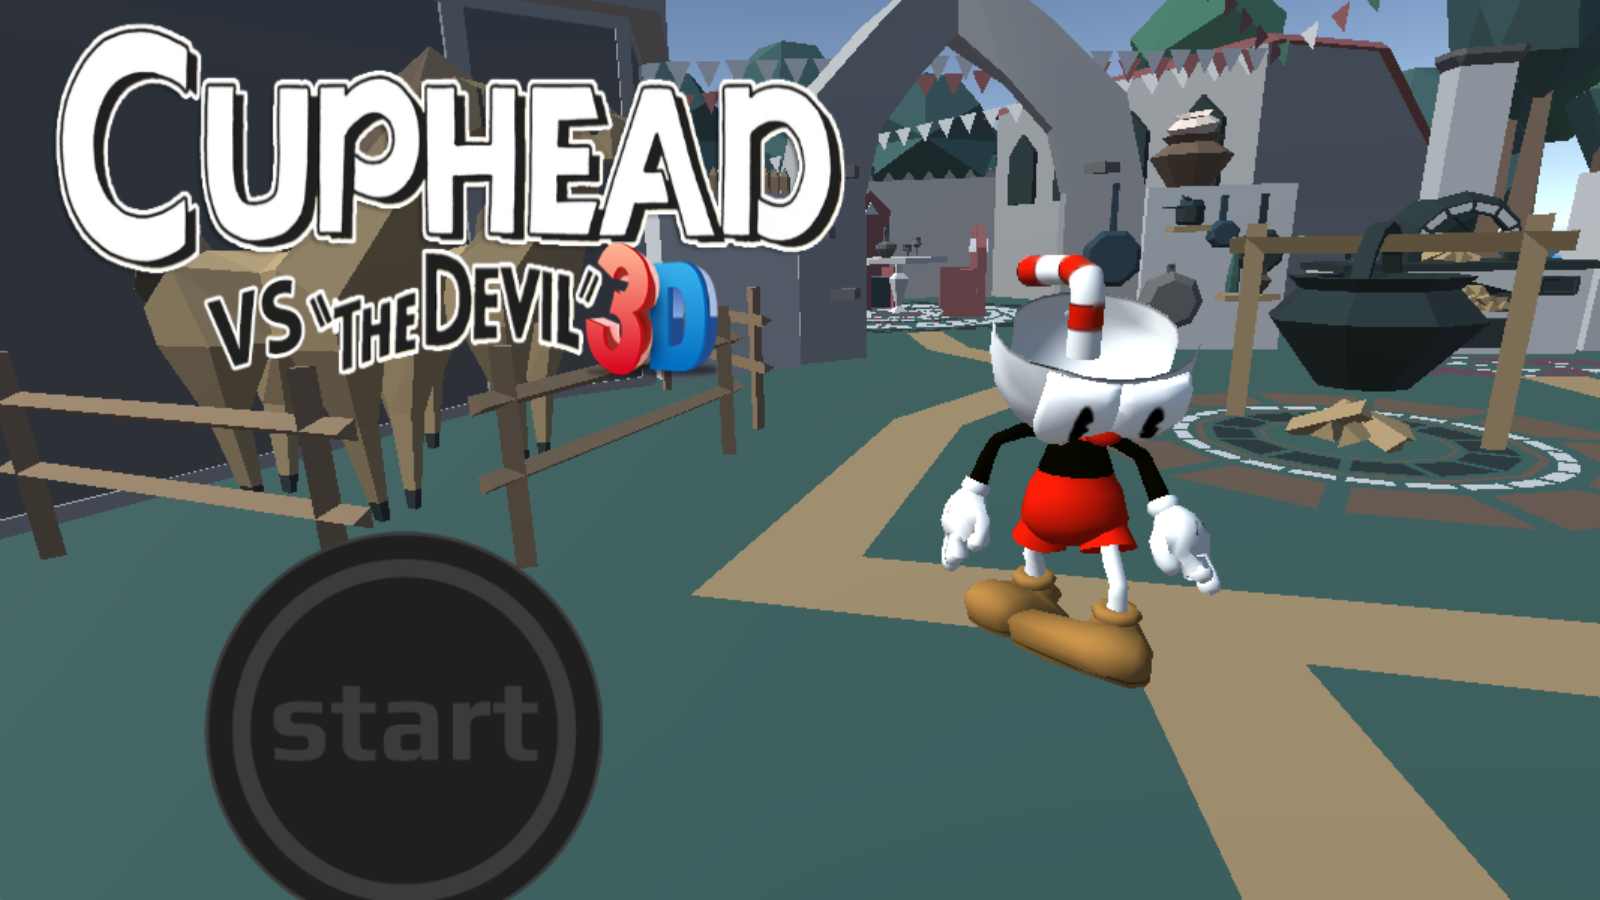 茶杯头3d版(Cuphead vs the devil 3D) 截图1